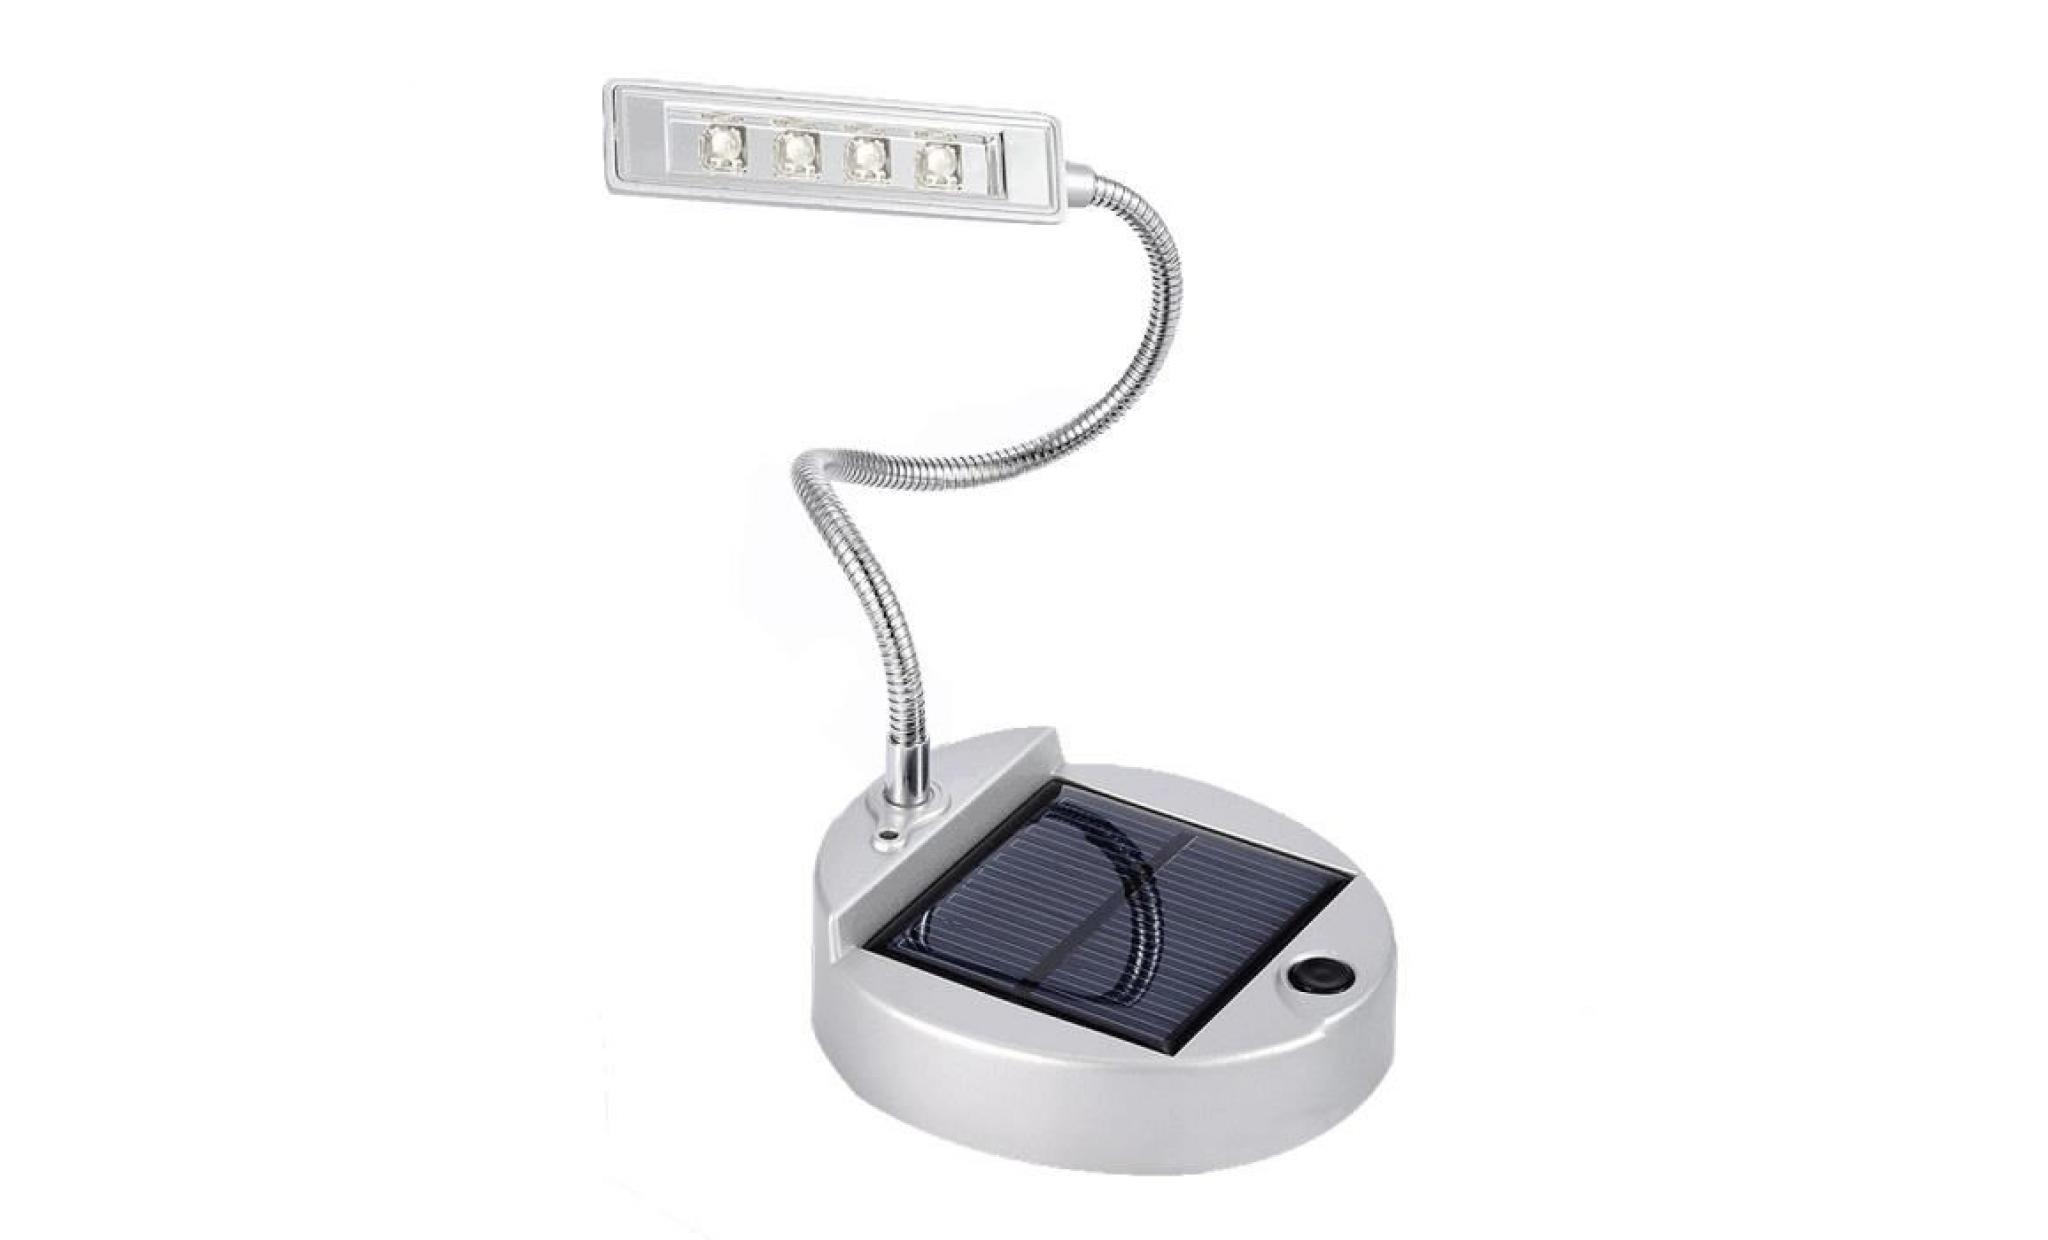 elinkume lampe de bureau 4 led solaire pliable usb rechargeable lampe de table lampe de chevet lecture led portable